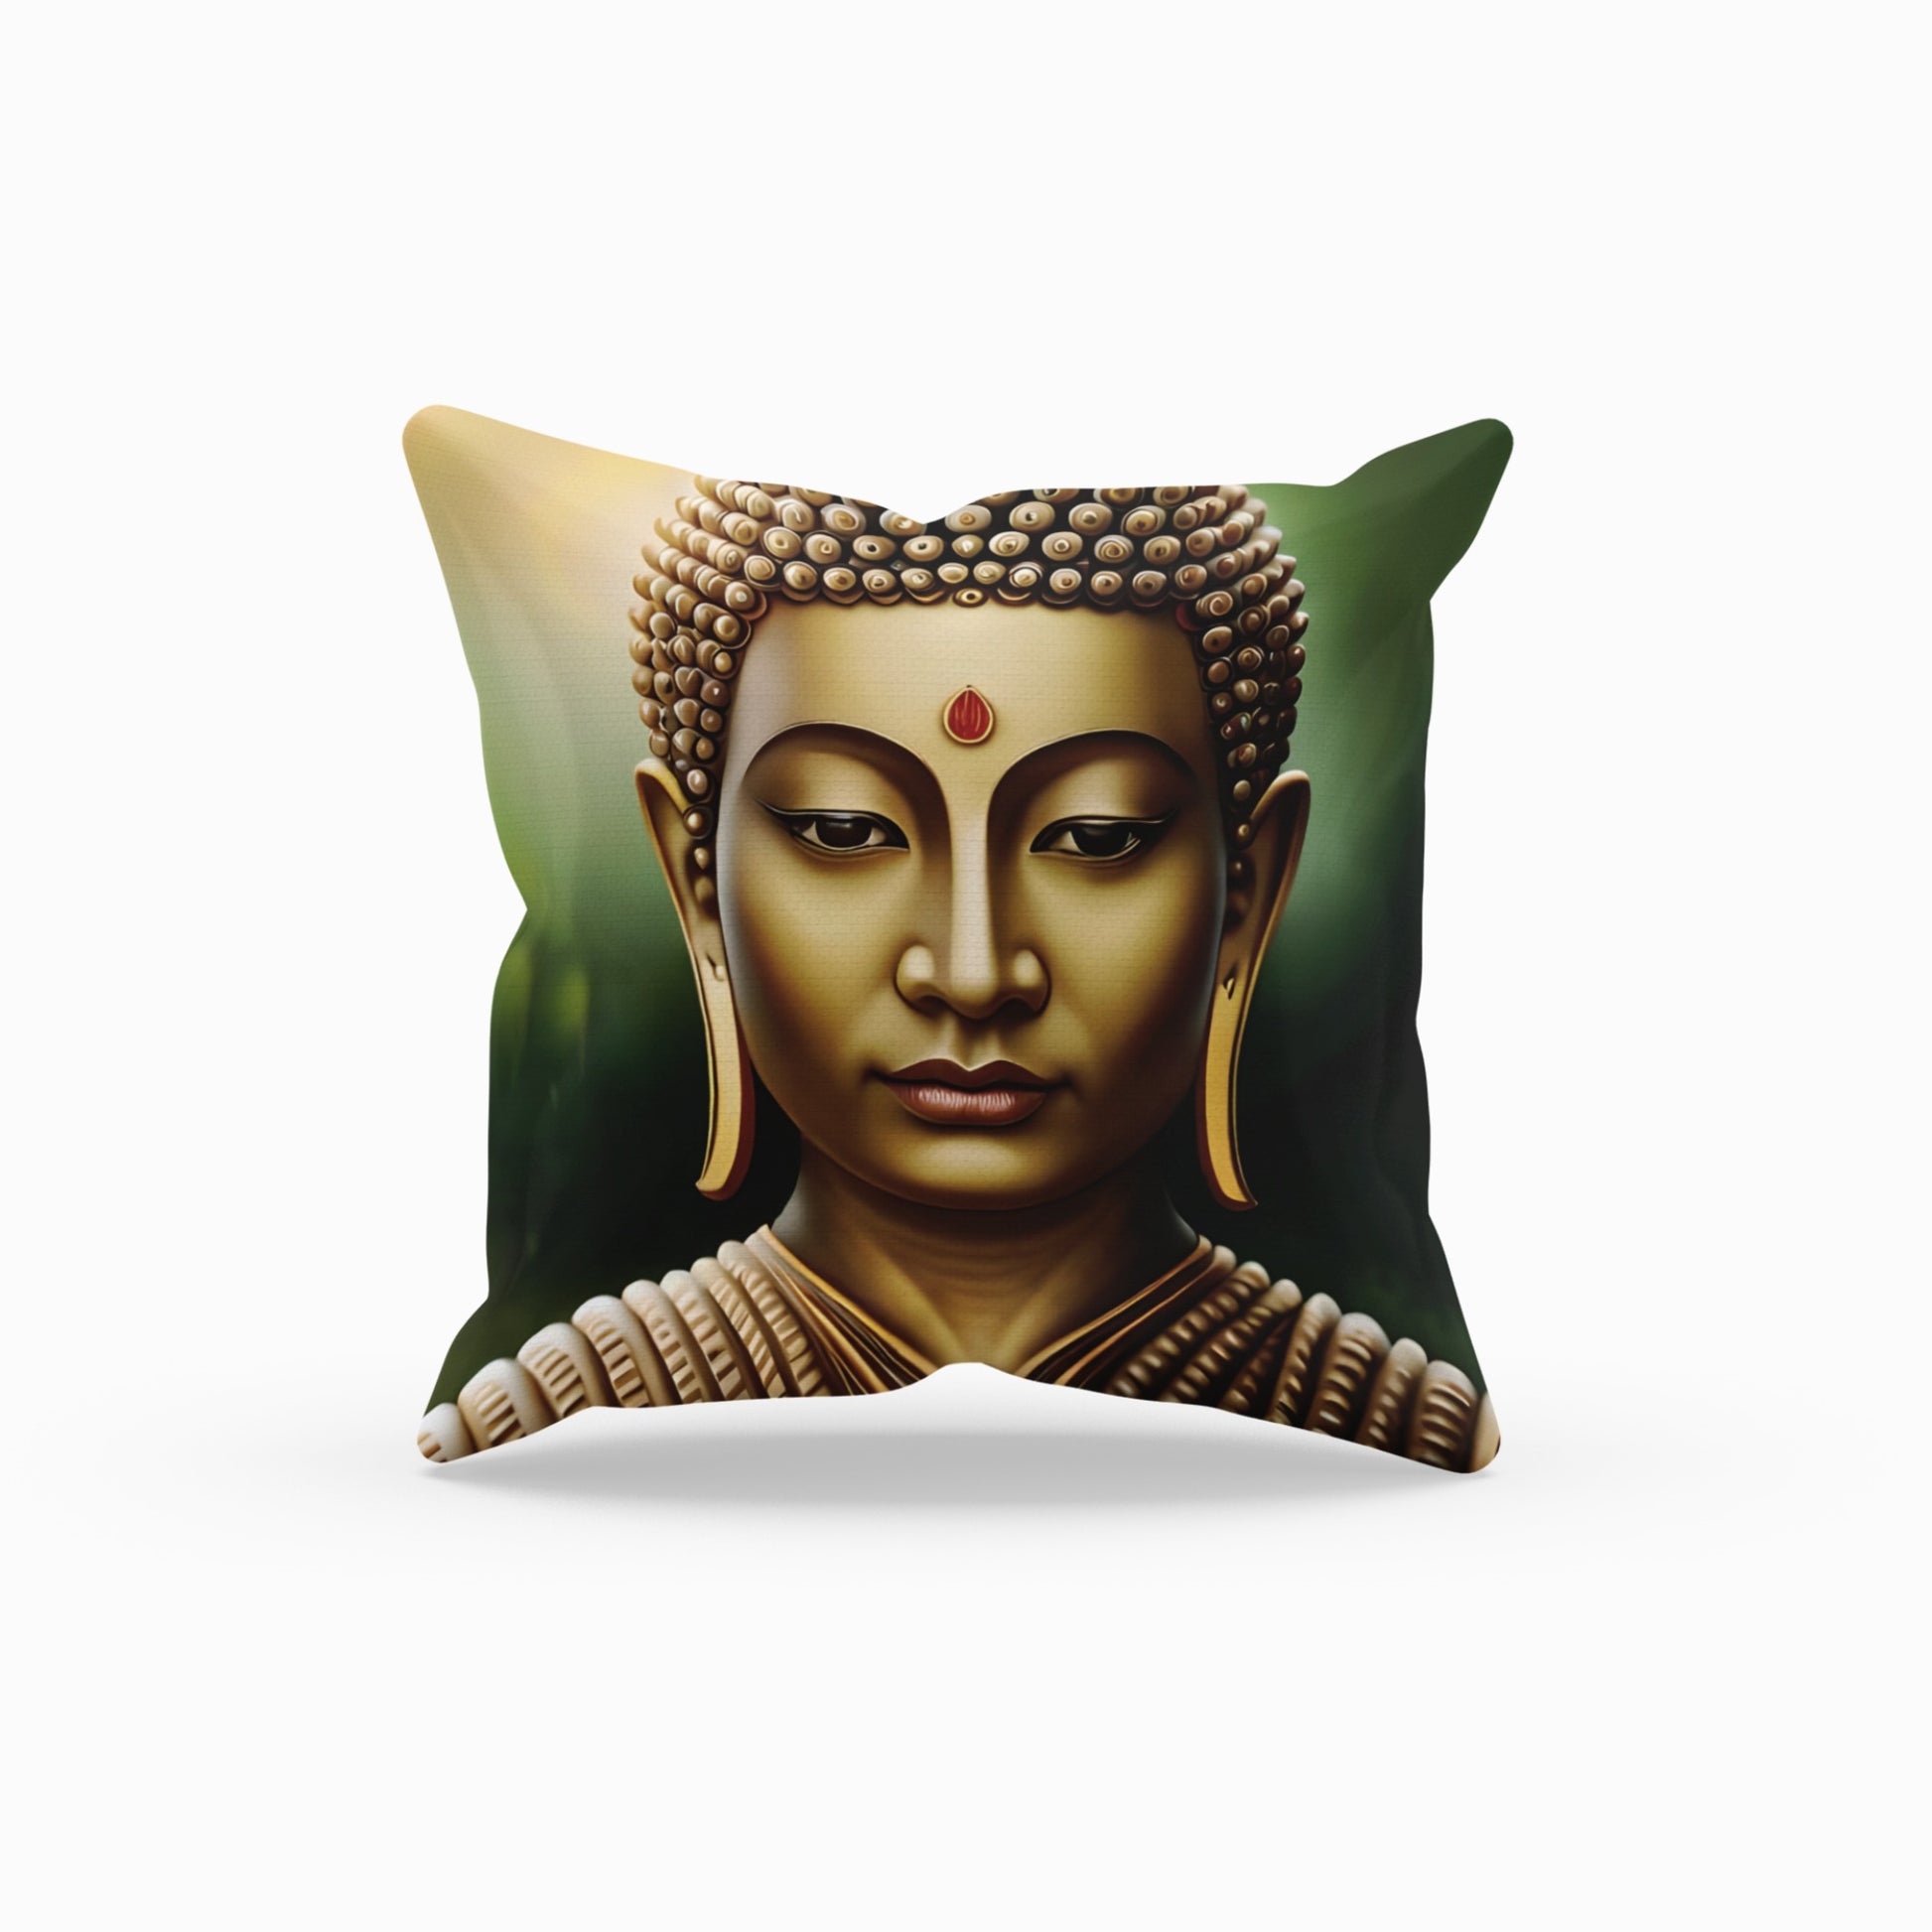 Homeezone's Buddha Boho Theme Pillow